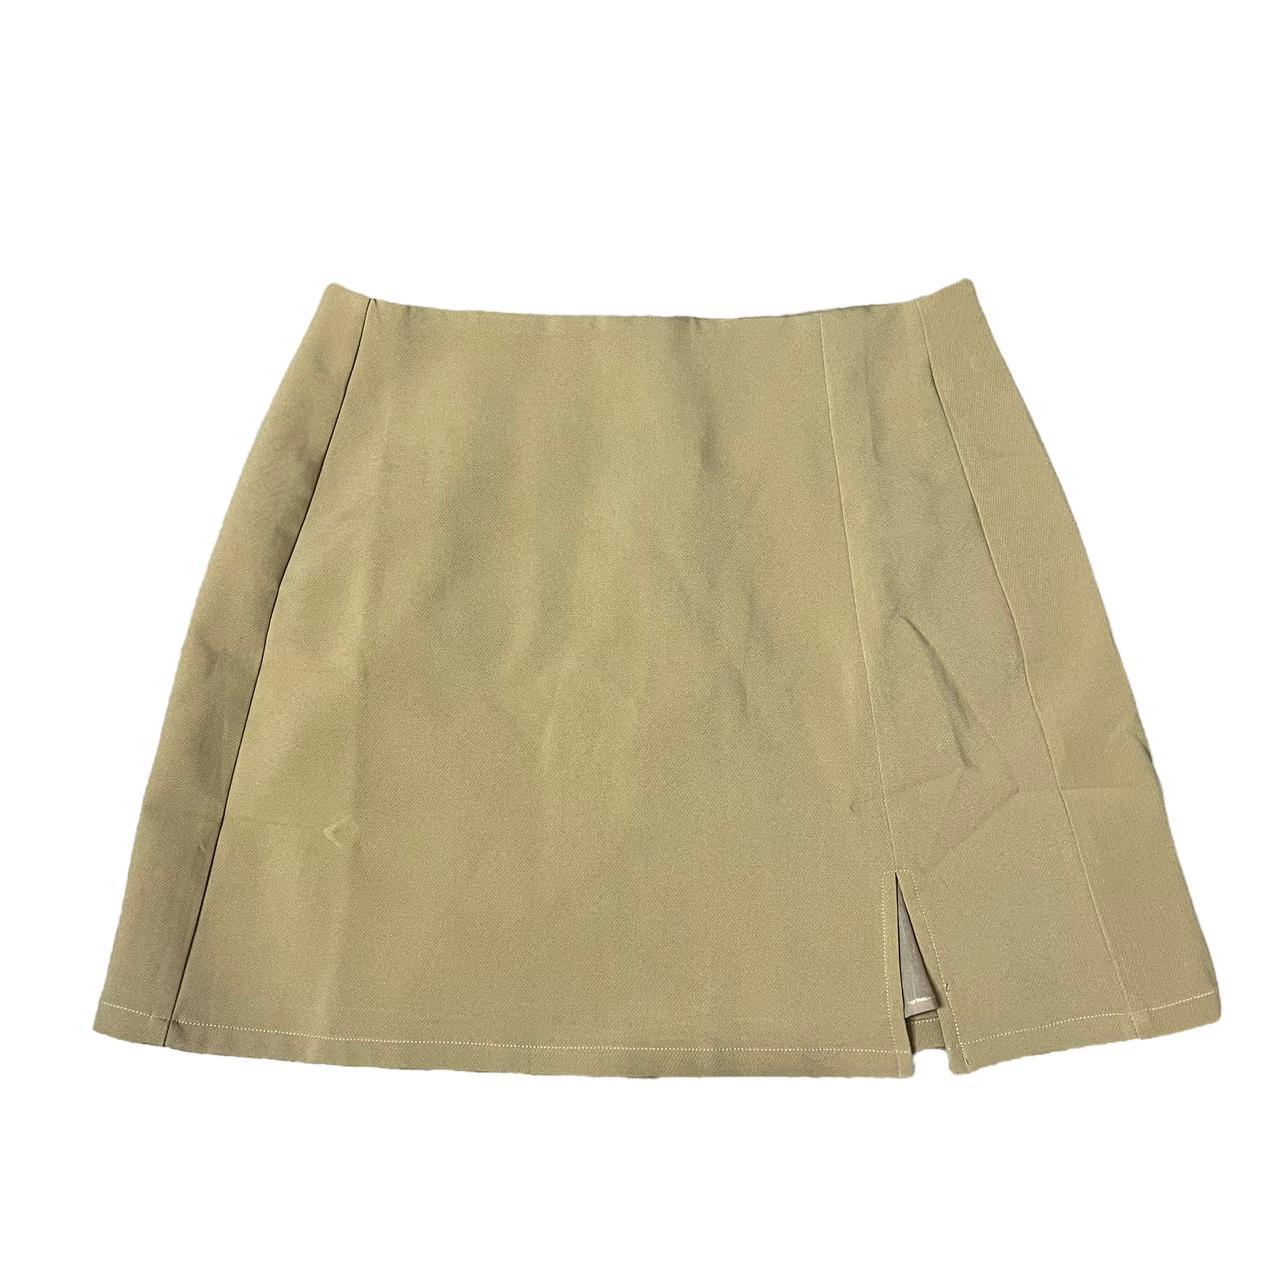 Ava & Ever tan mini skirt size 12 BNWT Great... - Depop